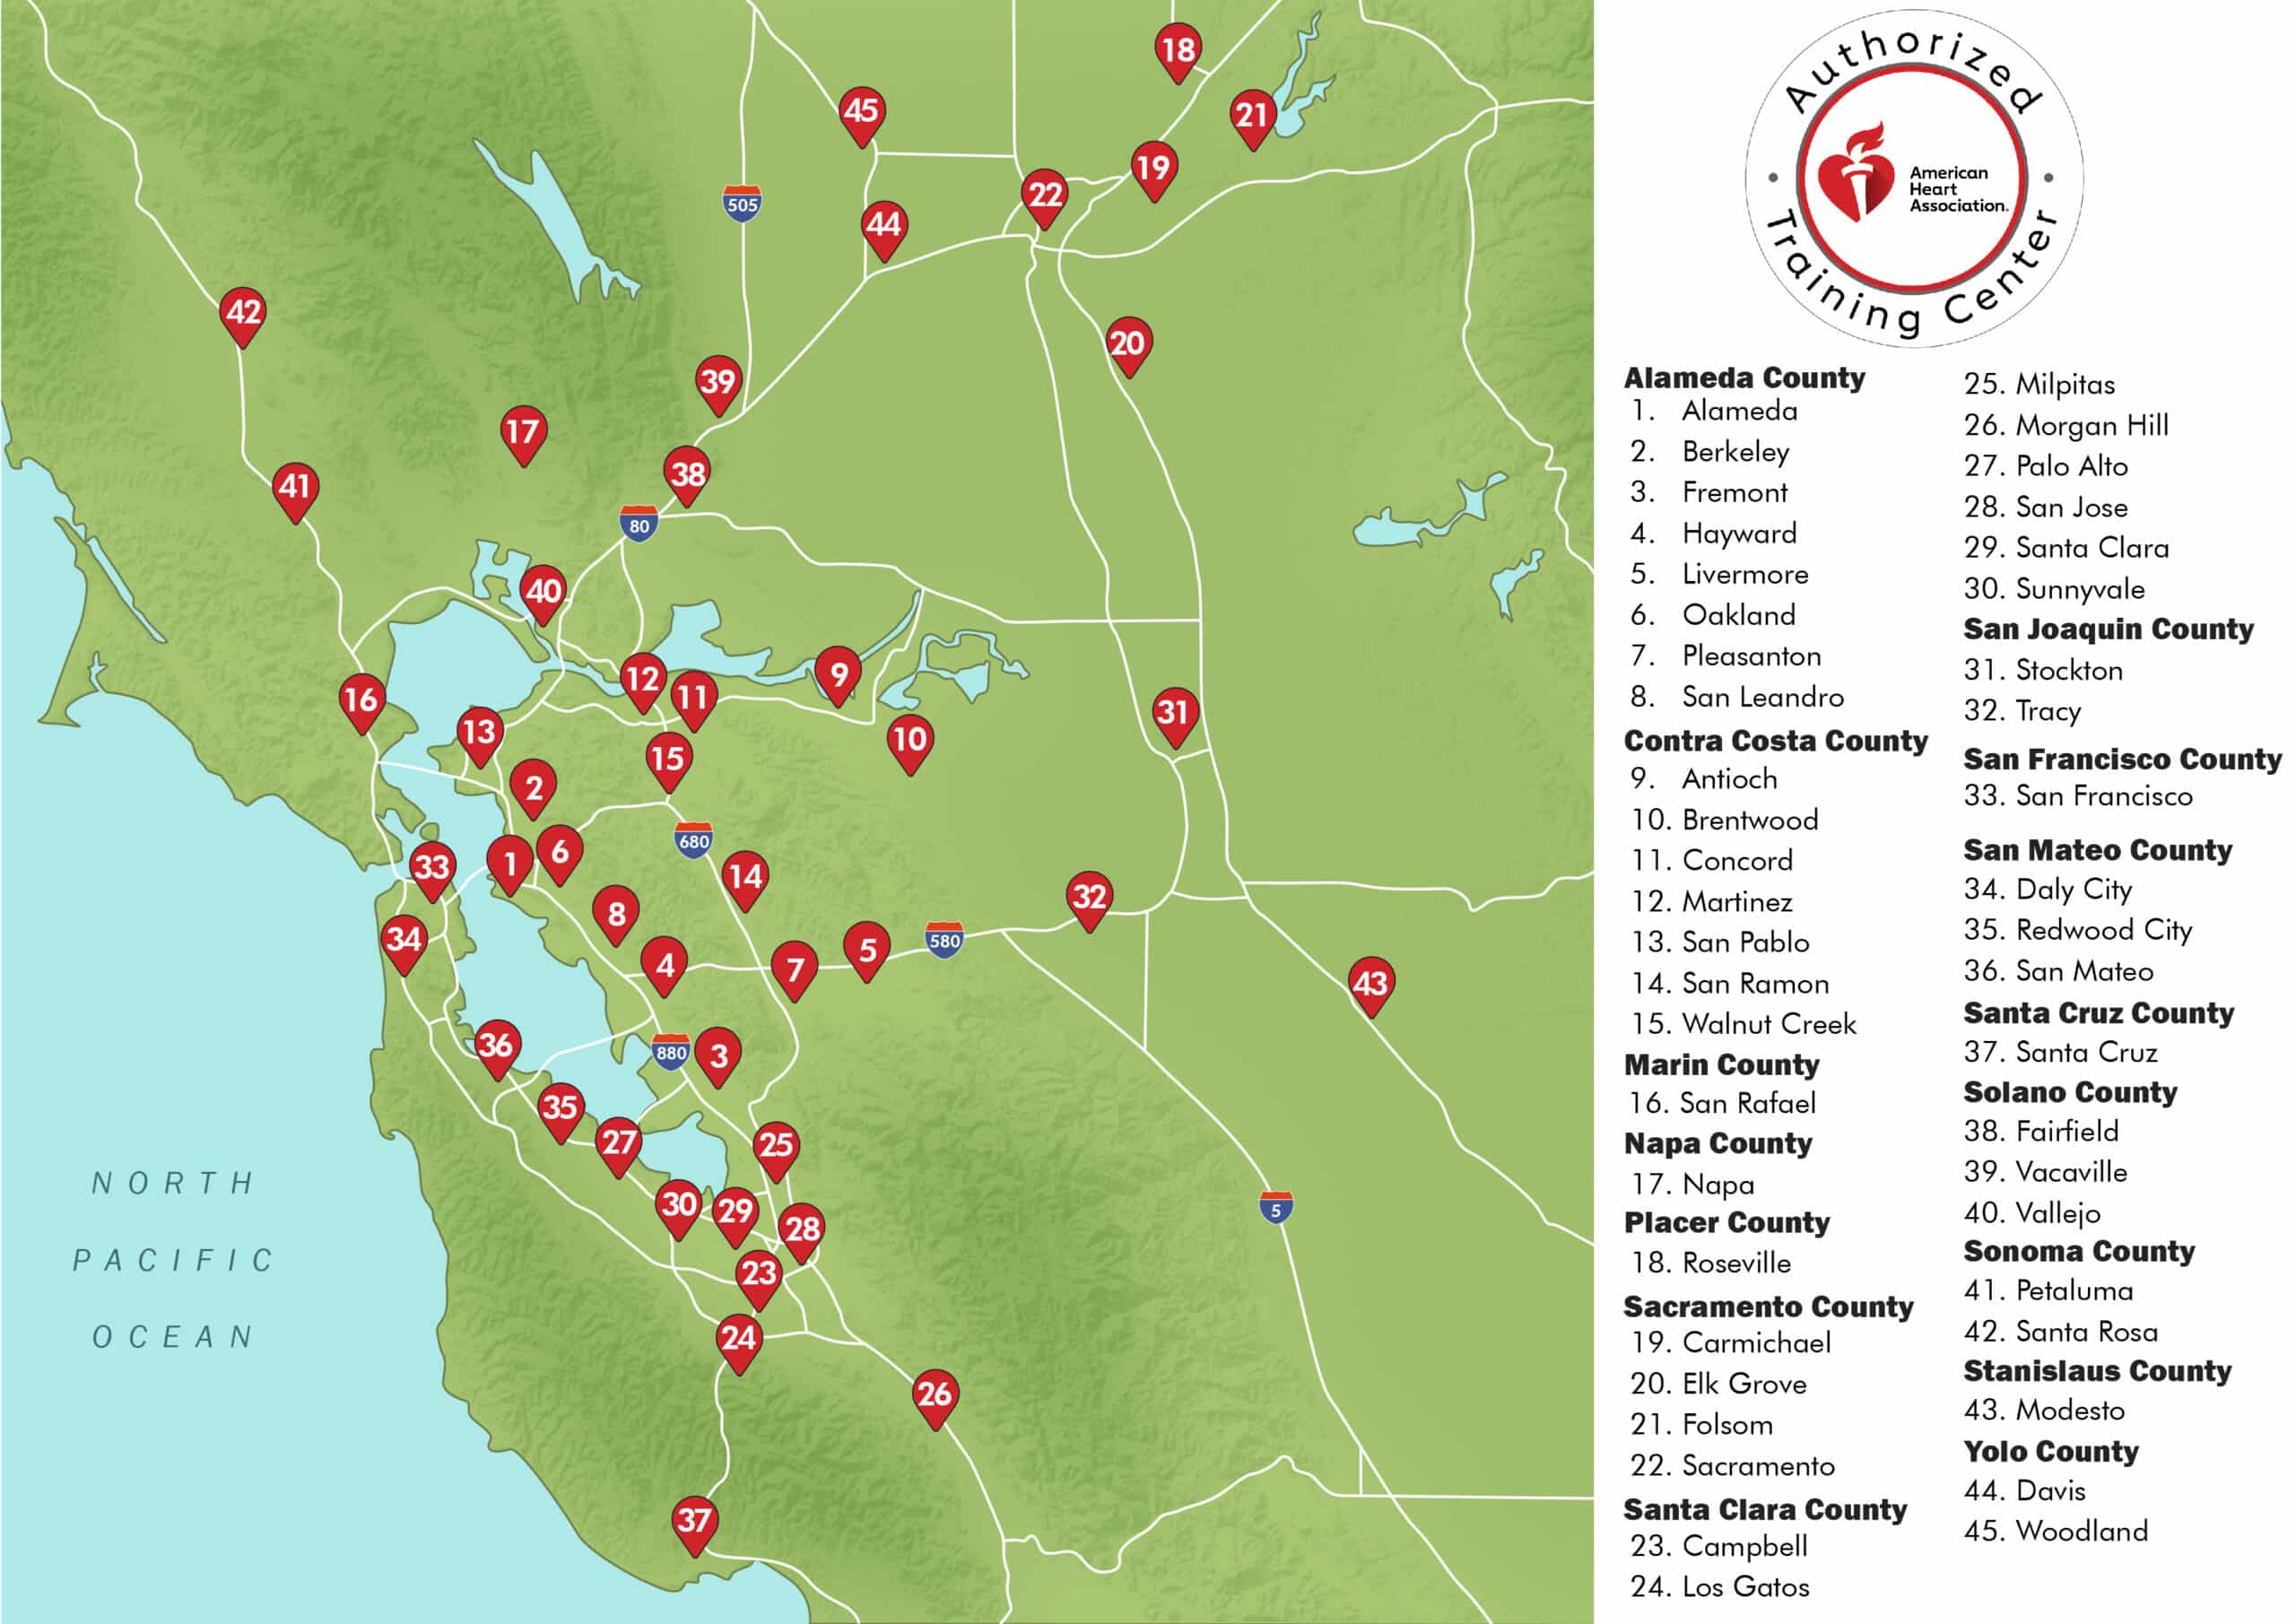 CPR Courses in Walnut Creek, CA